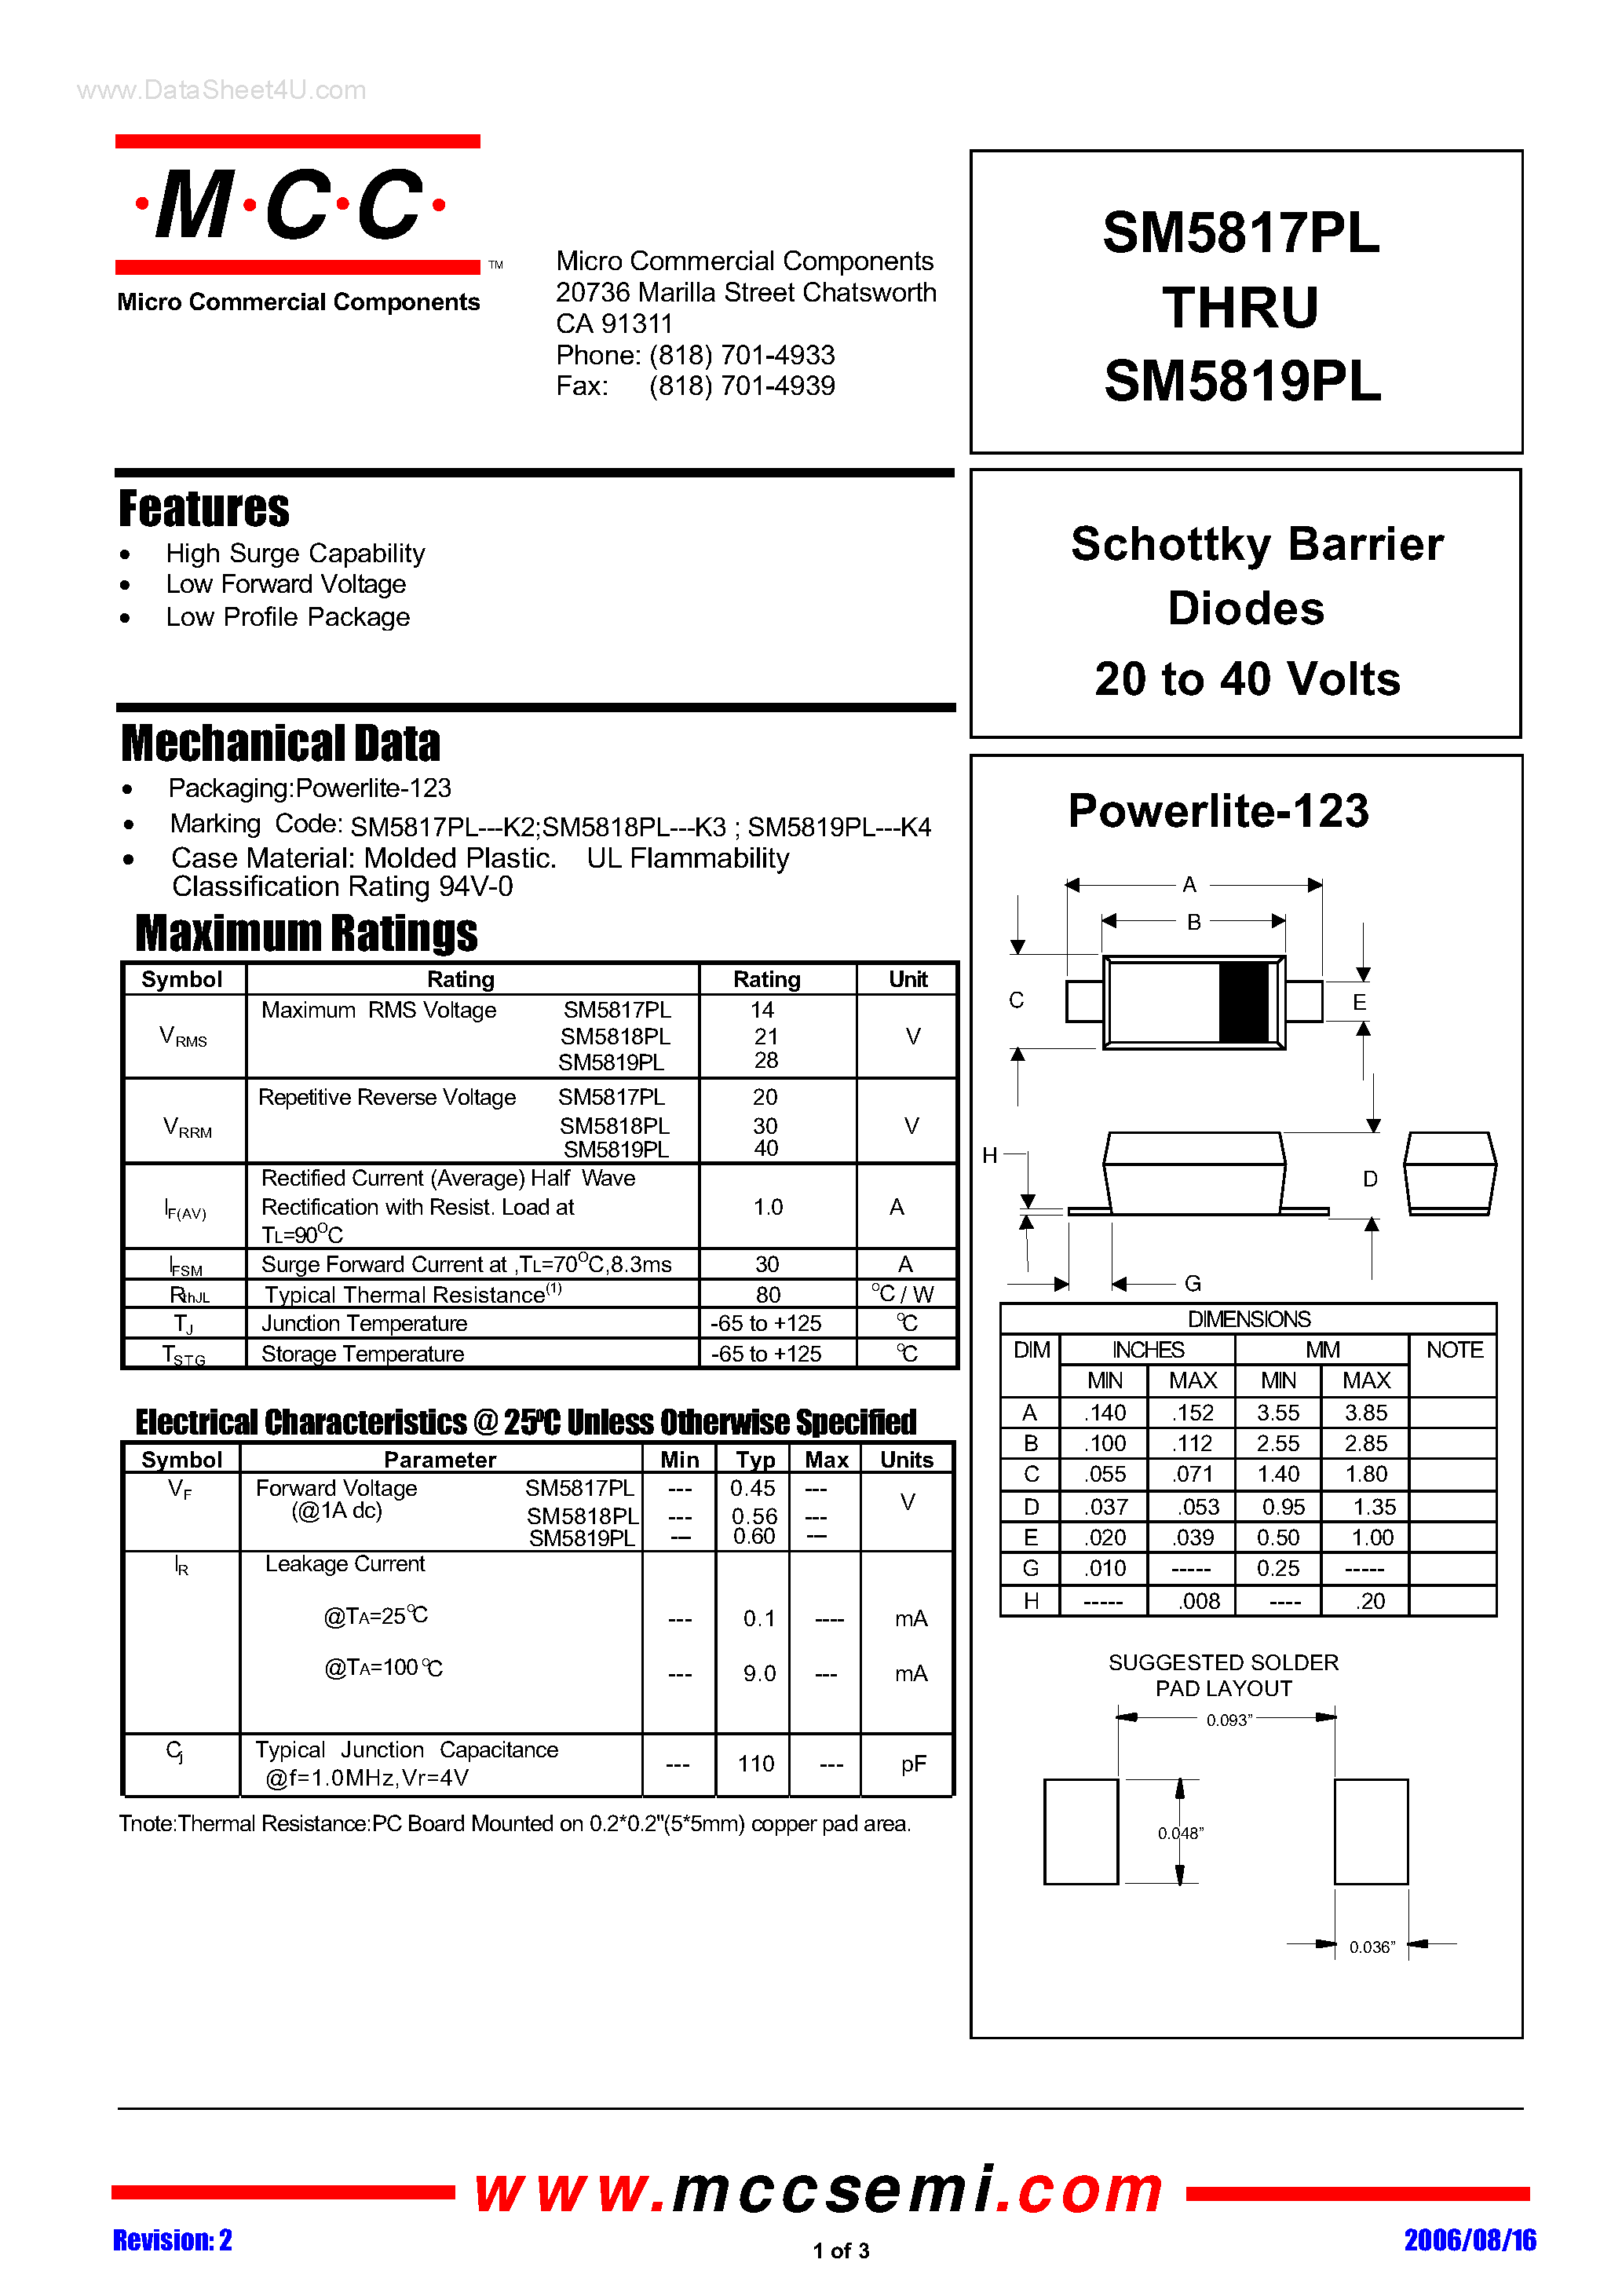 Datasheet SM5817PL - (SM5817PL - SM5819PL) Schottky Barrier Diodes page 1